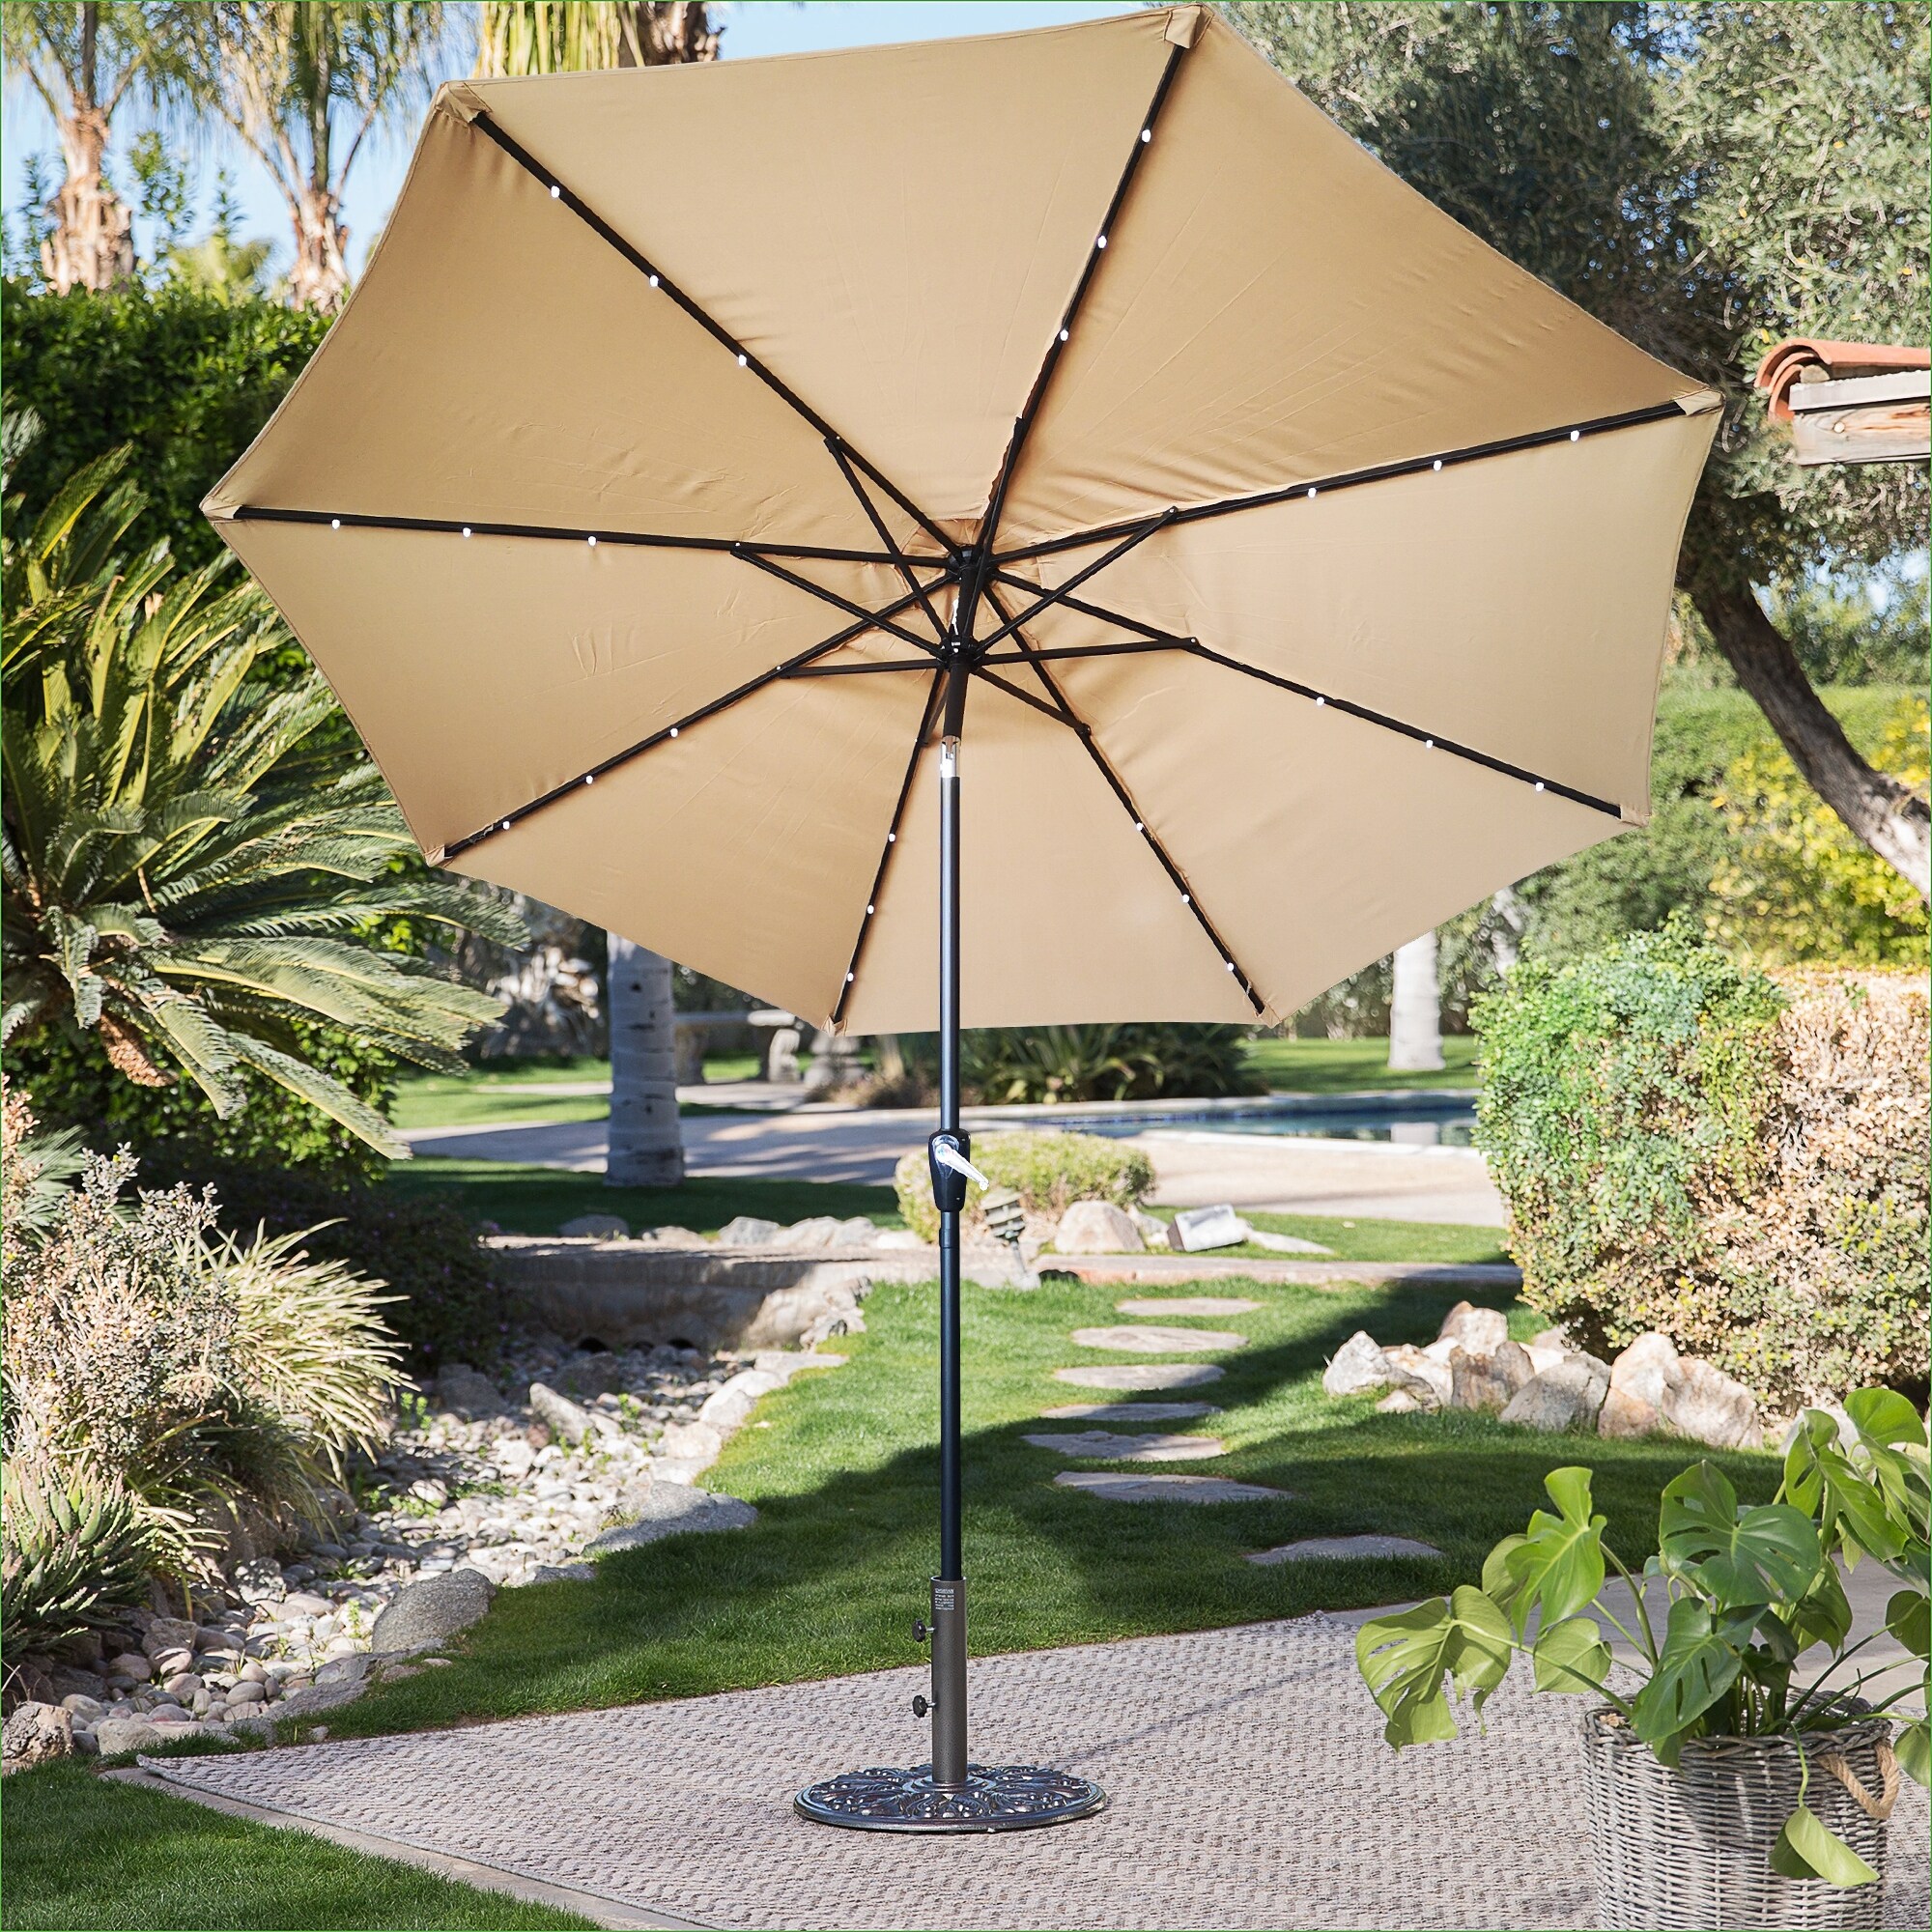 10Ft Lighted Aluminum Patio Table Market Umbrella with Tilt and Crank for Garden,Deck,Backyard,Pool Light Blue